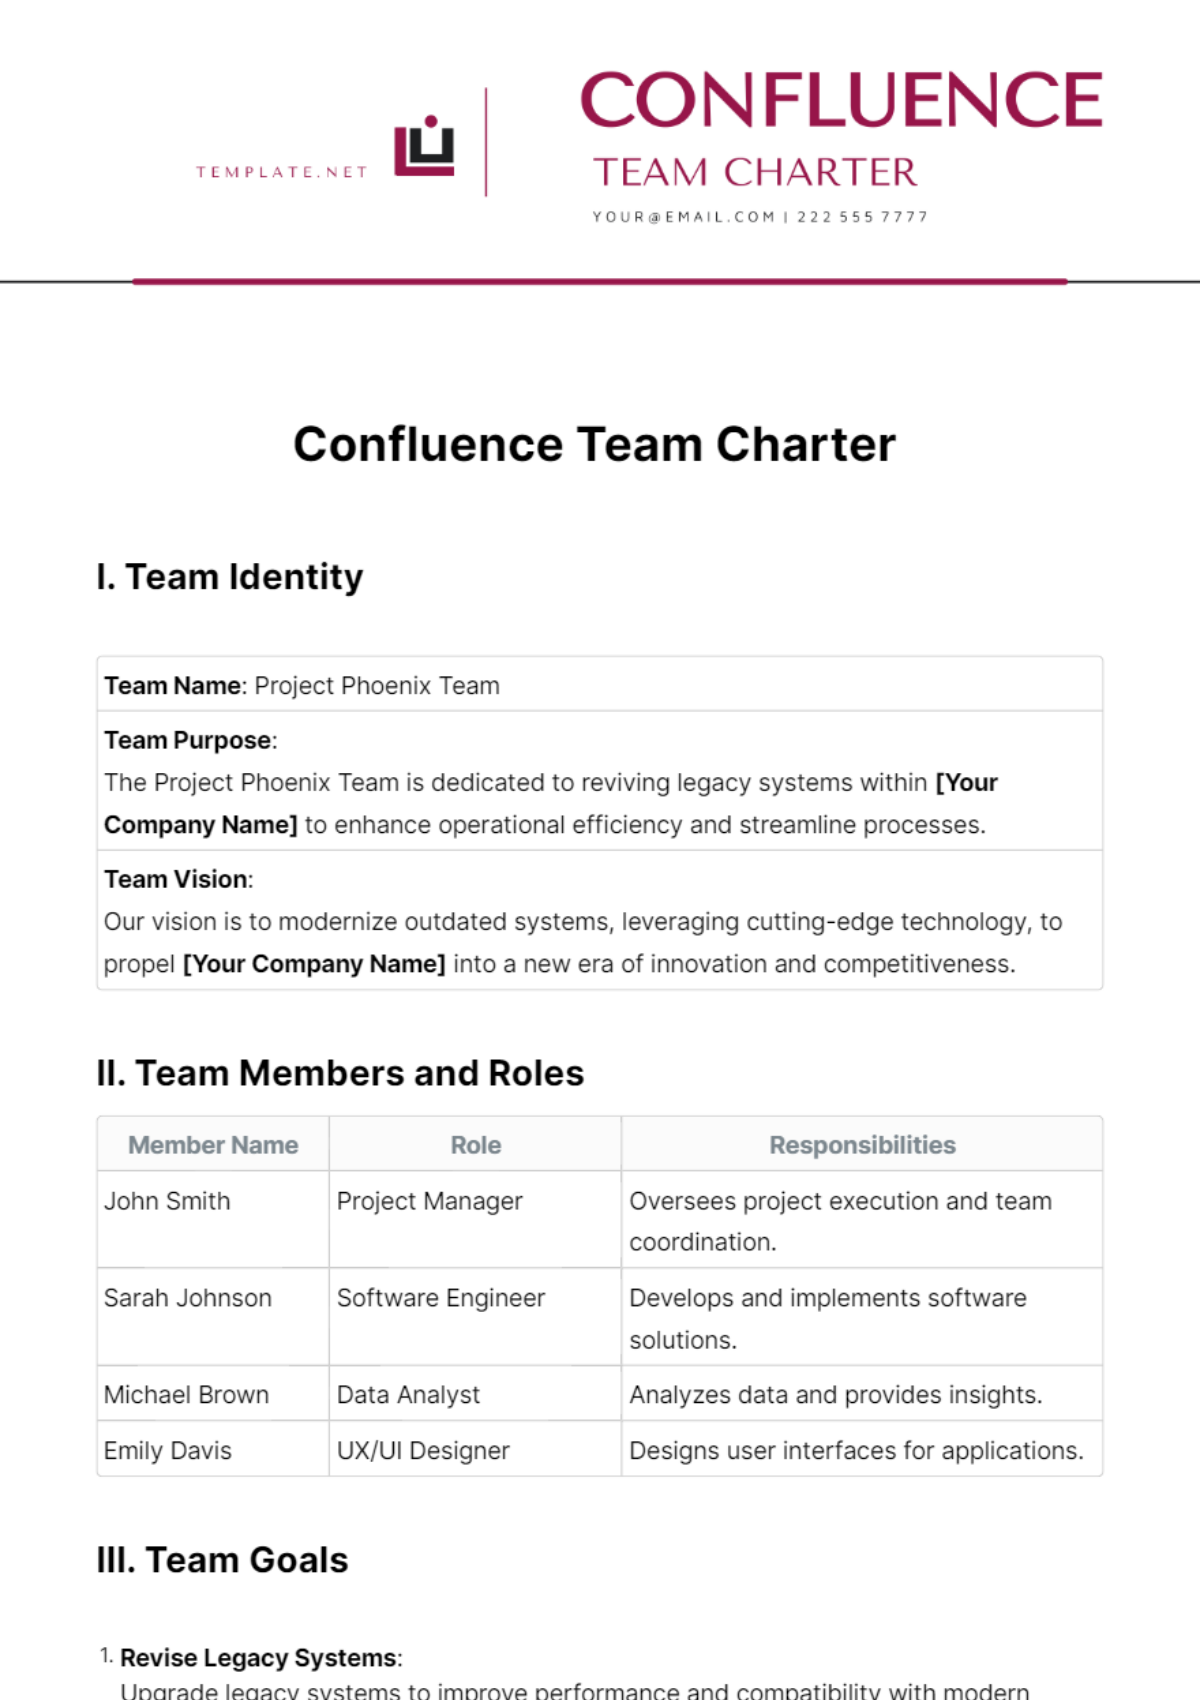 Confluence Team Charter Template